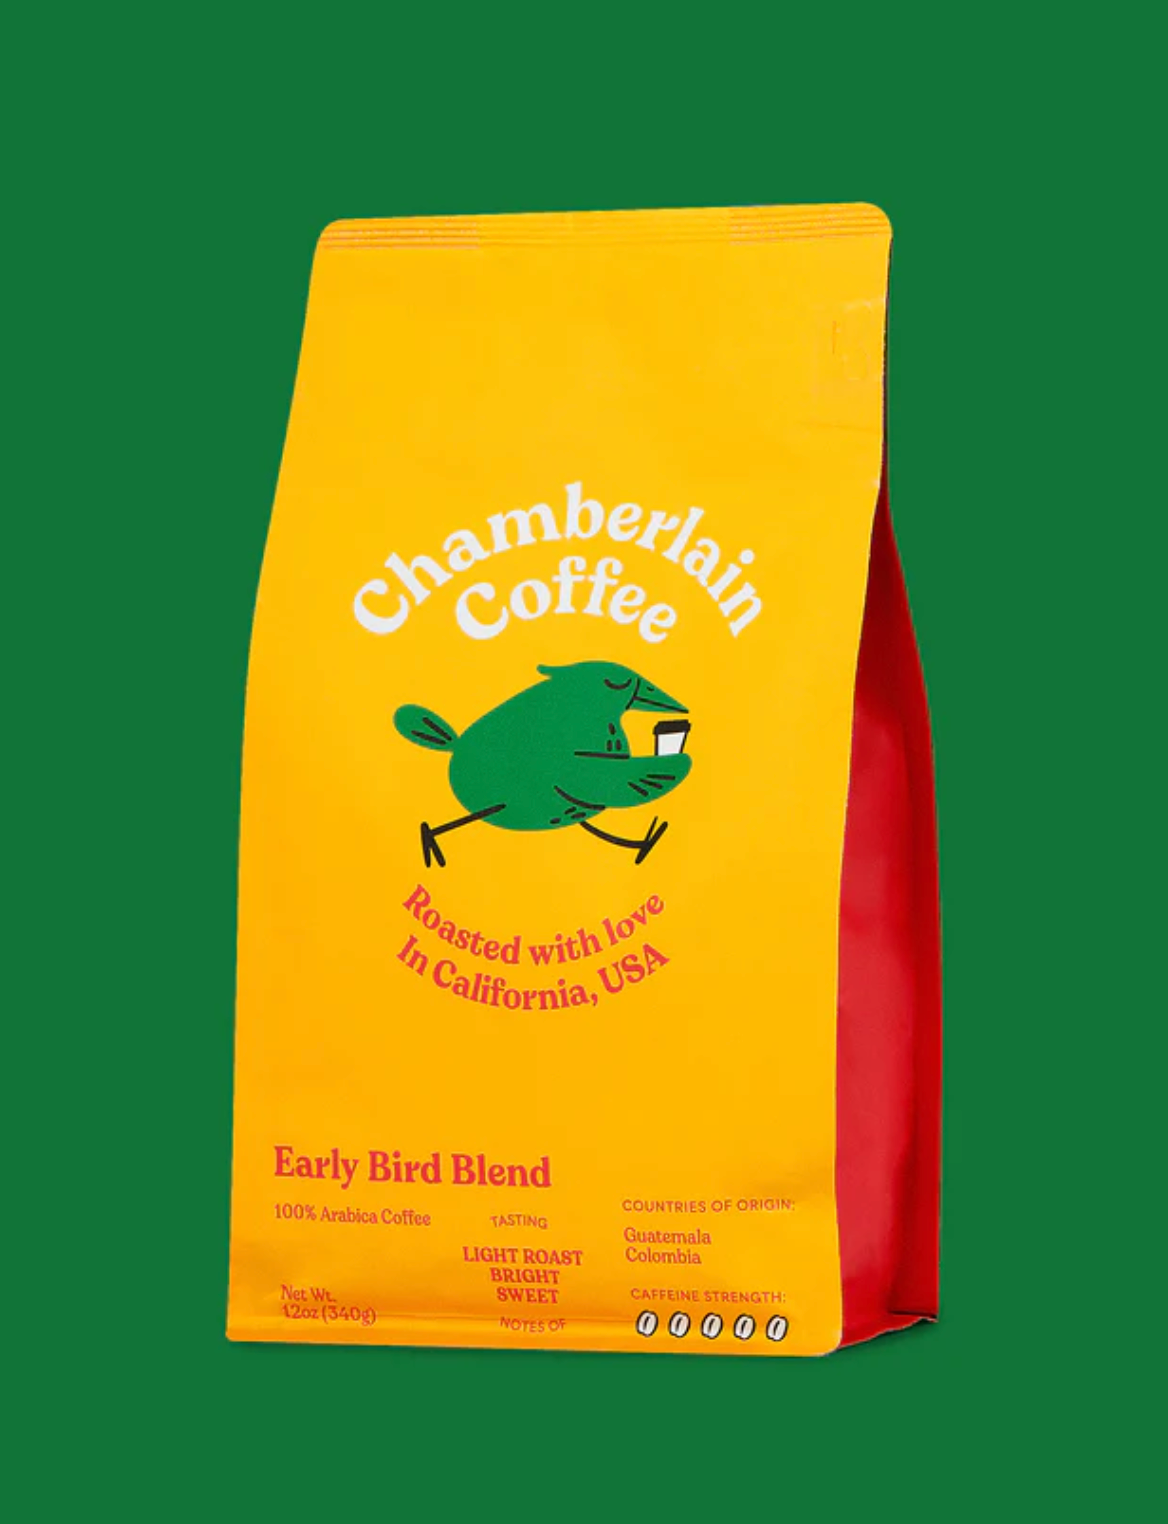 chamberlain-coffee-early-bird-blend-coffee-bag